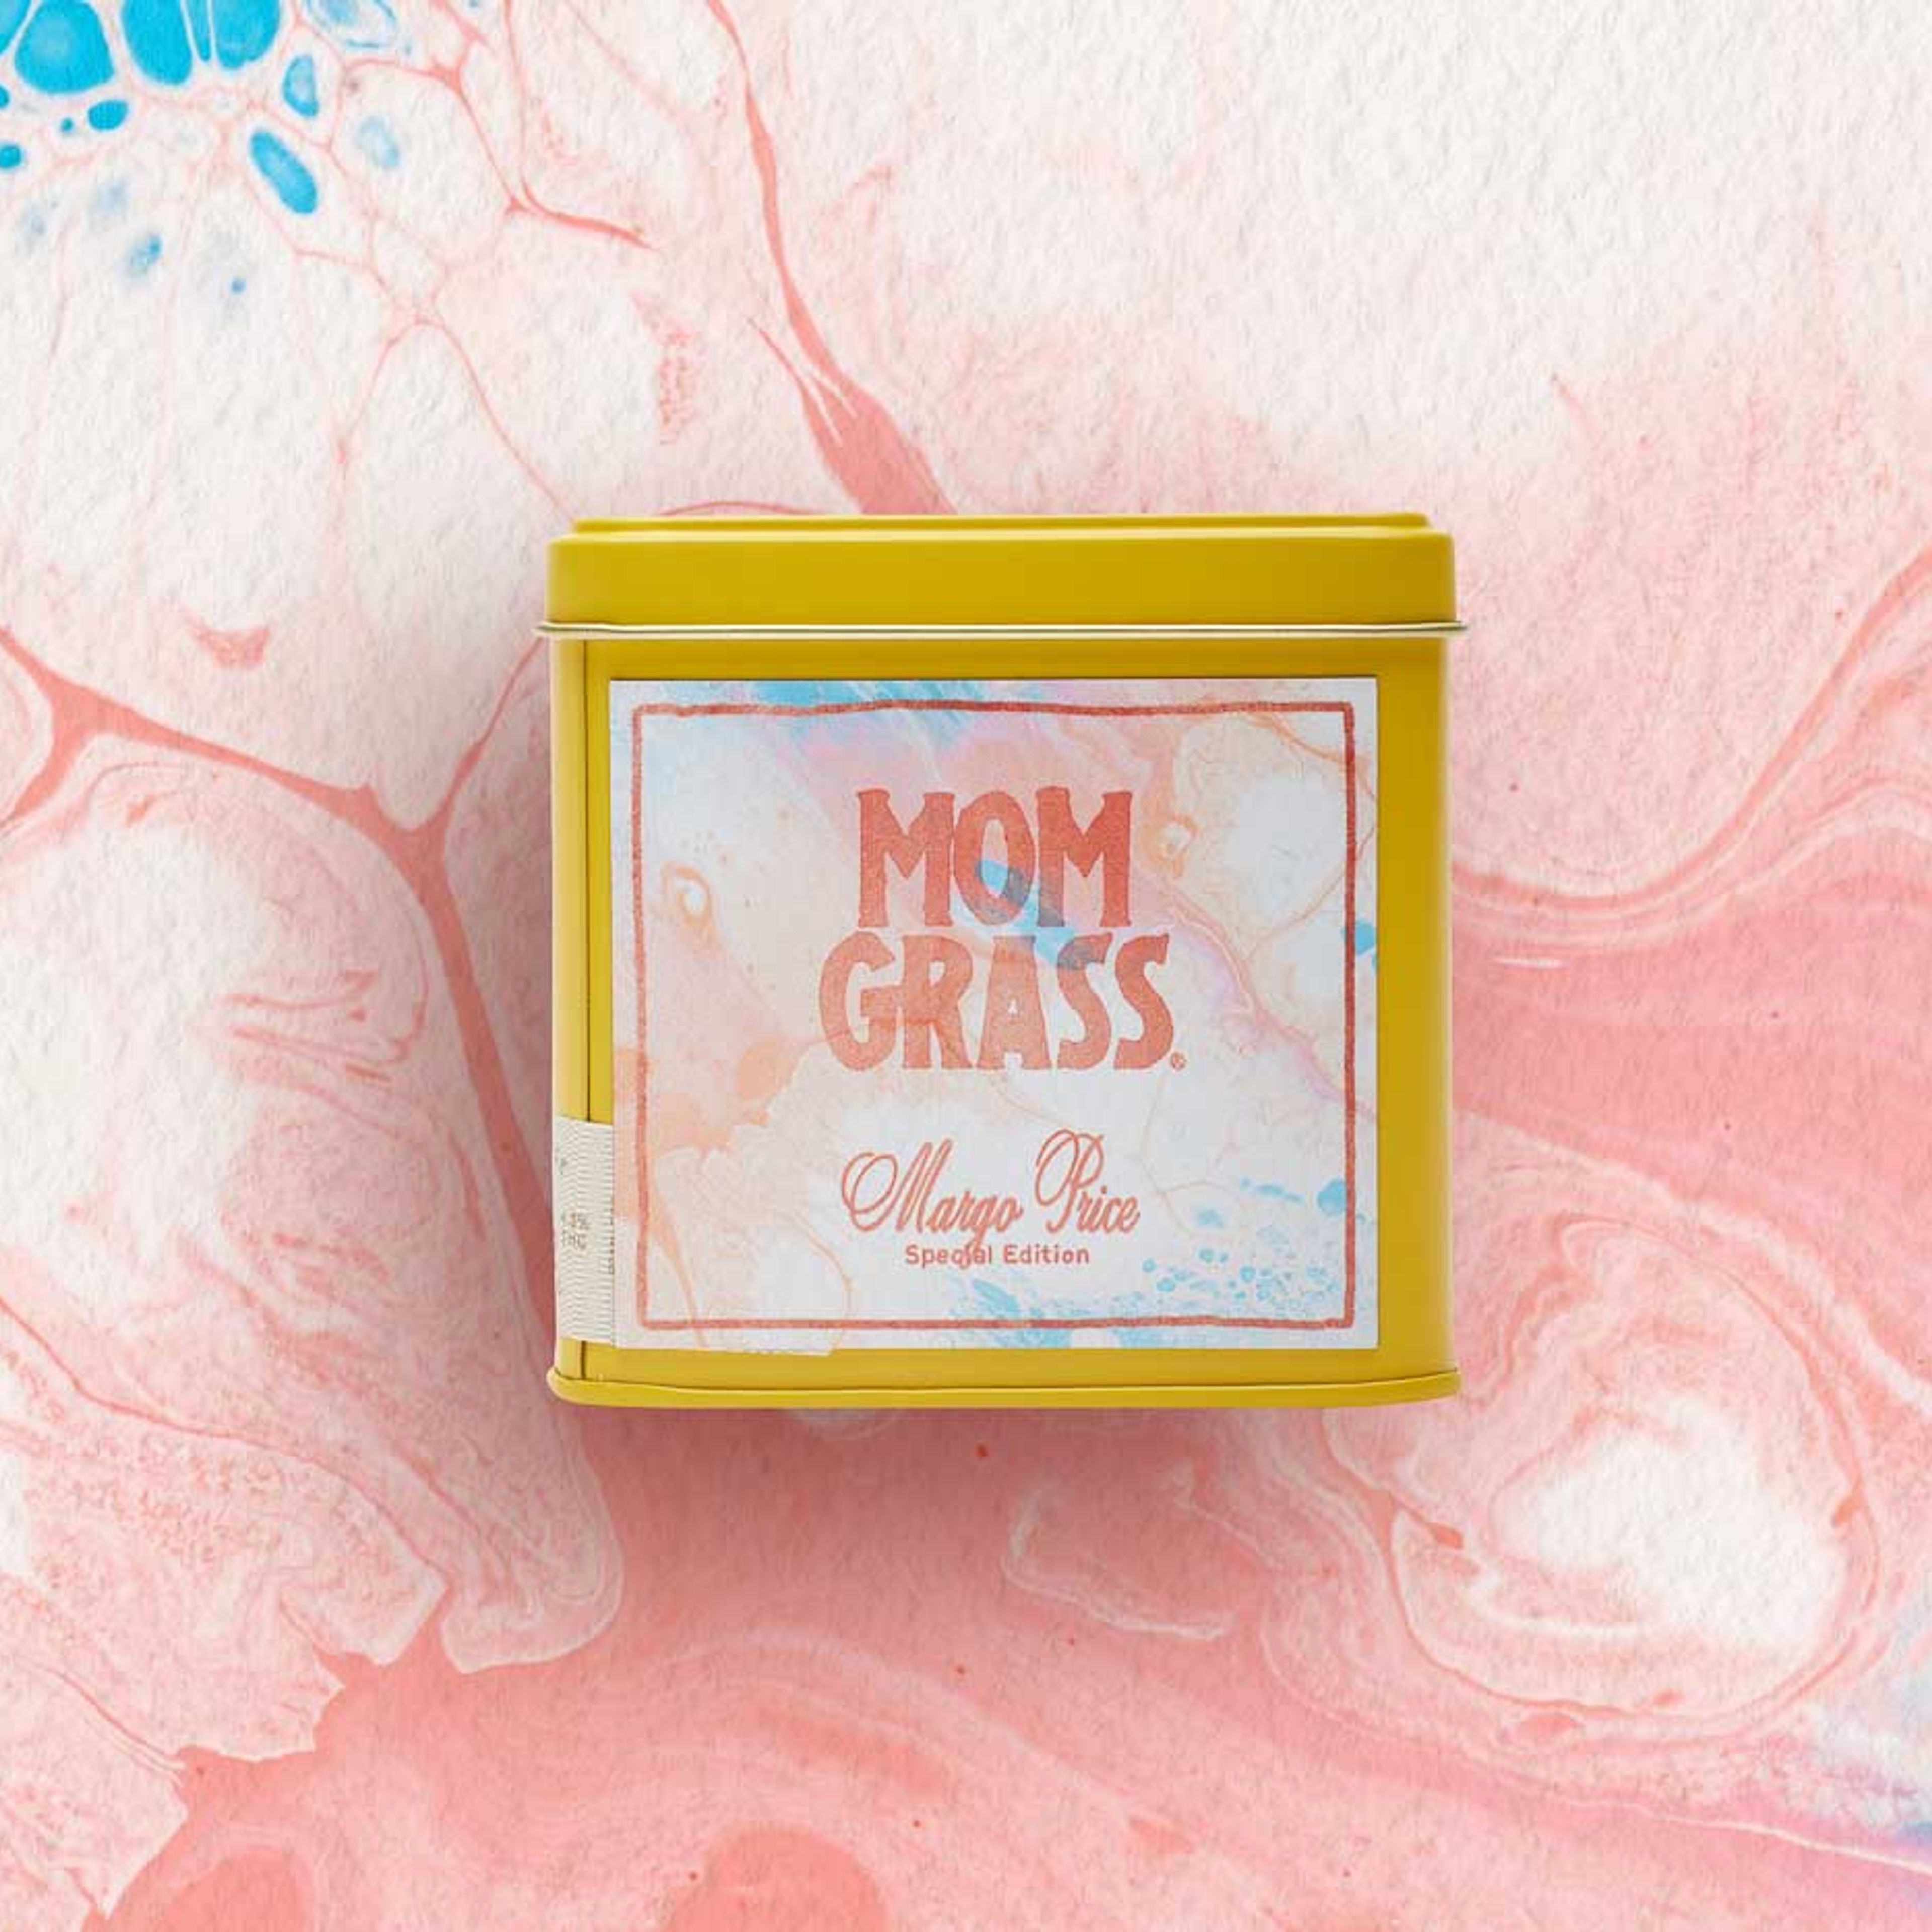 Mom Grass X Margo Price Special Edition Flower